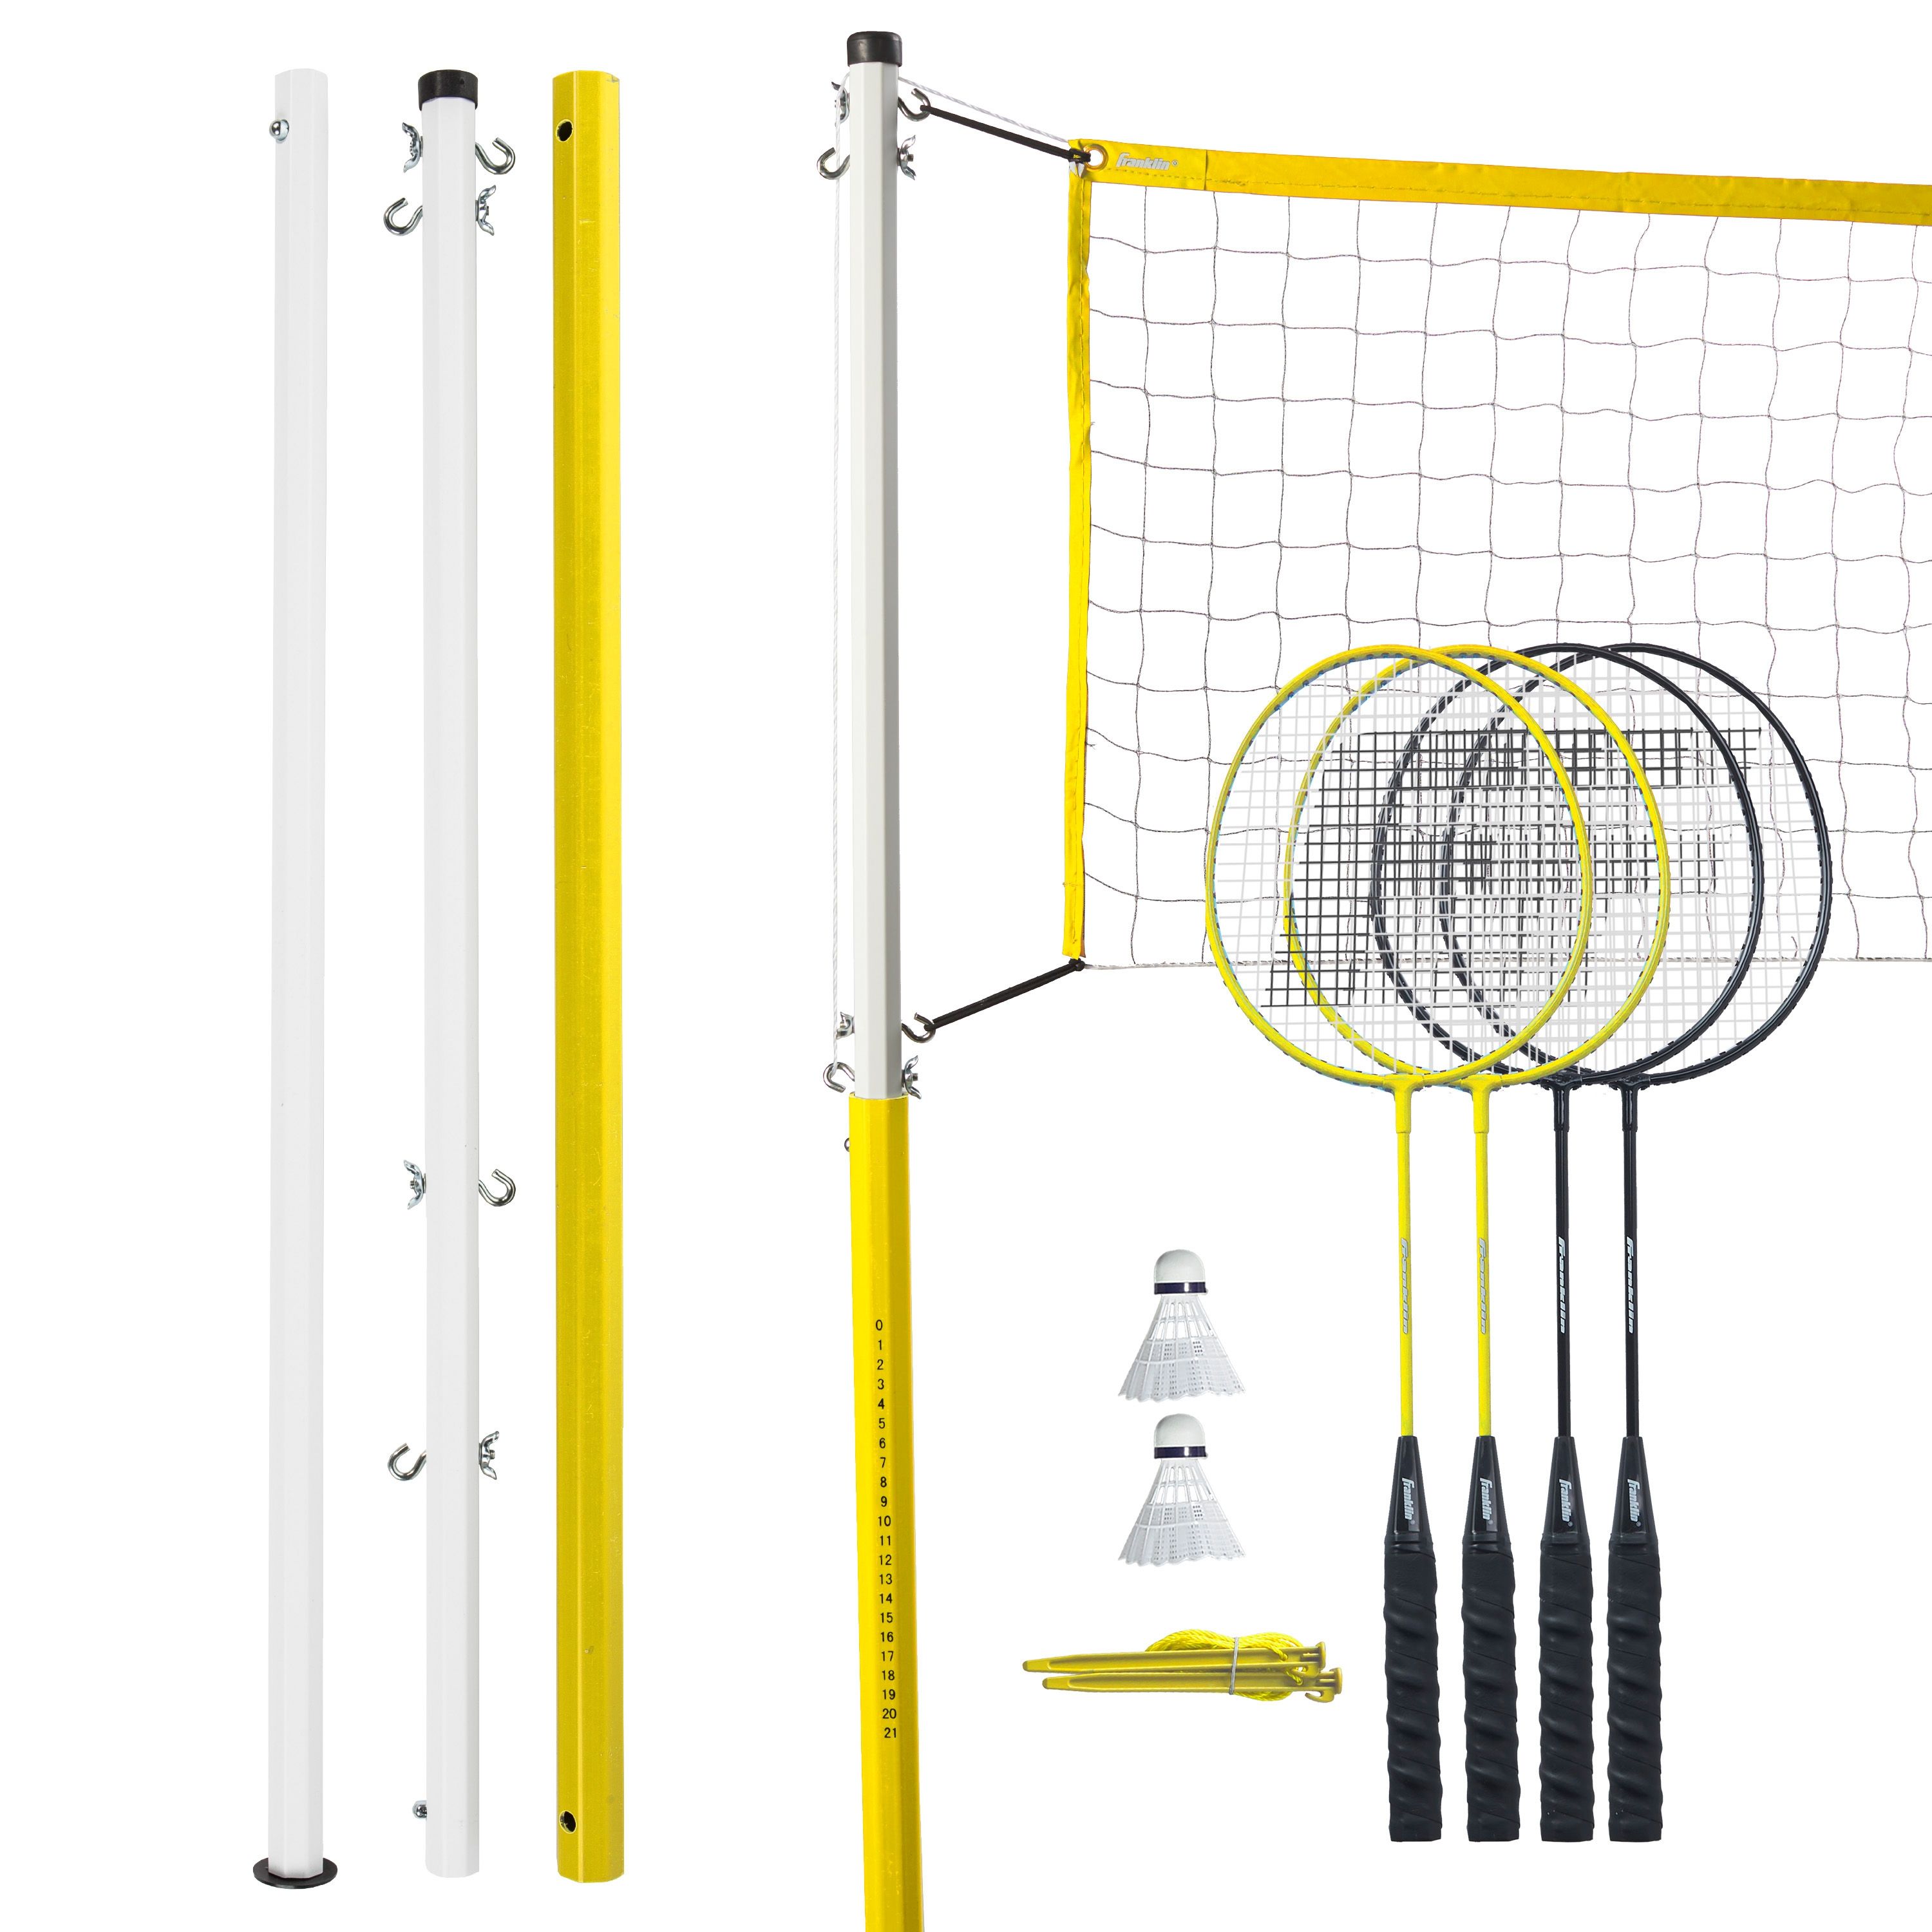 Set Badminton Familiar Franklin